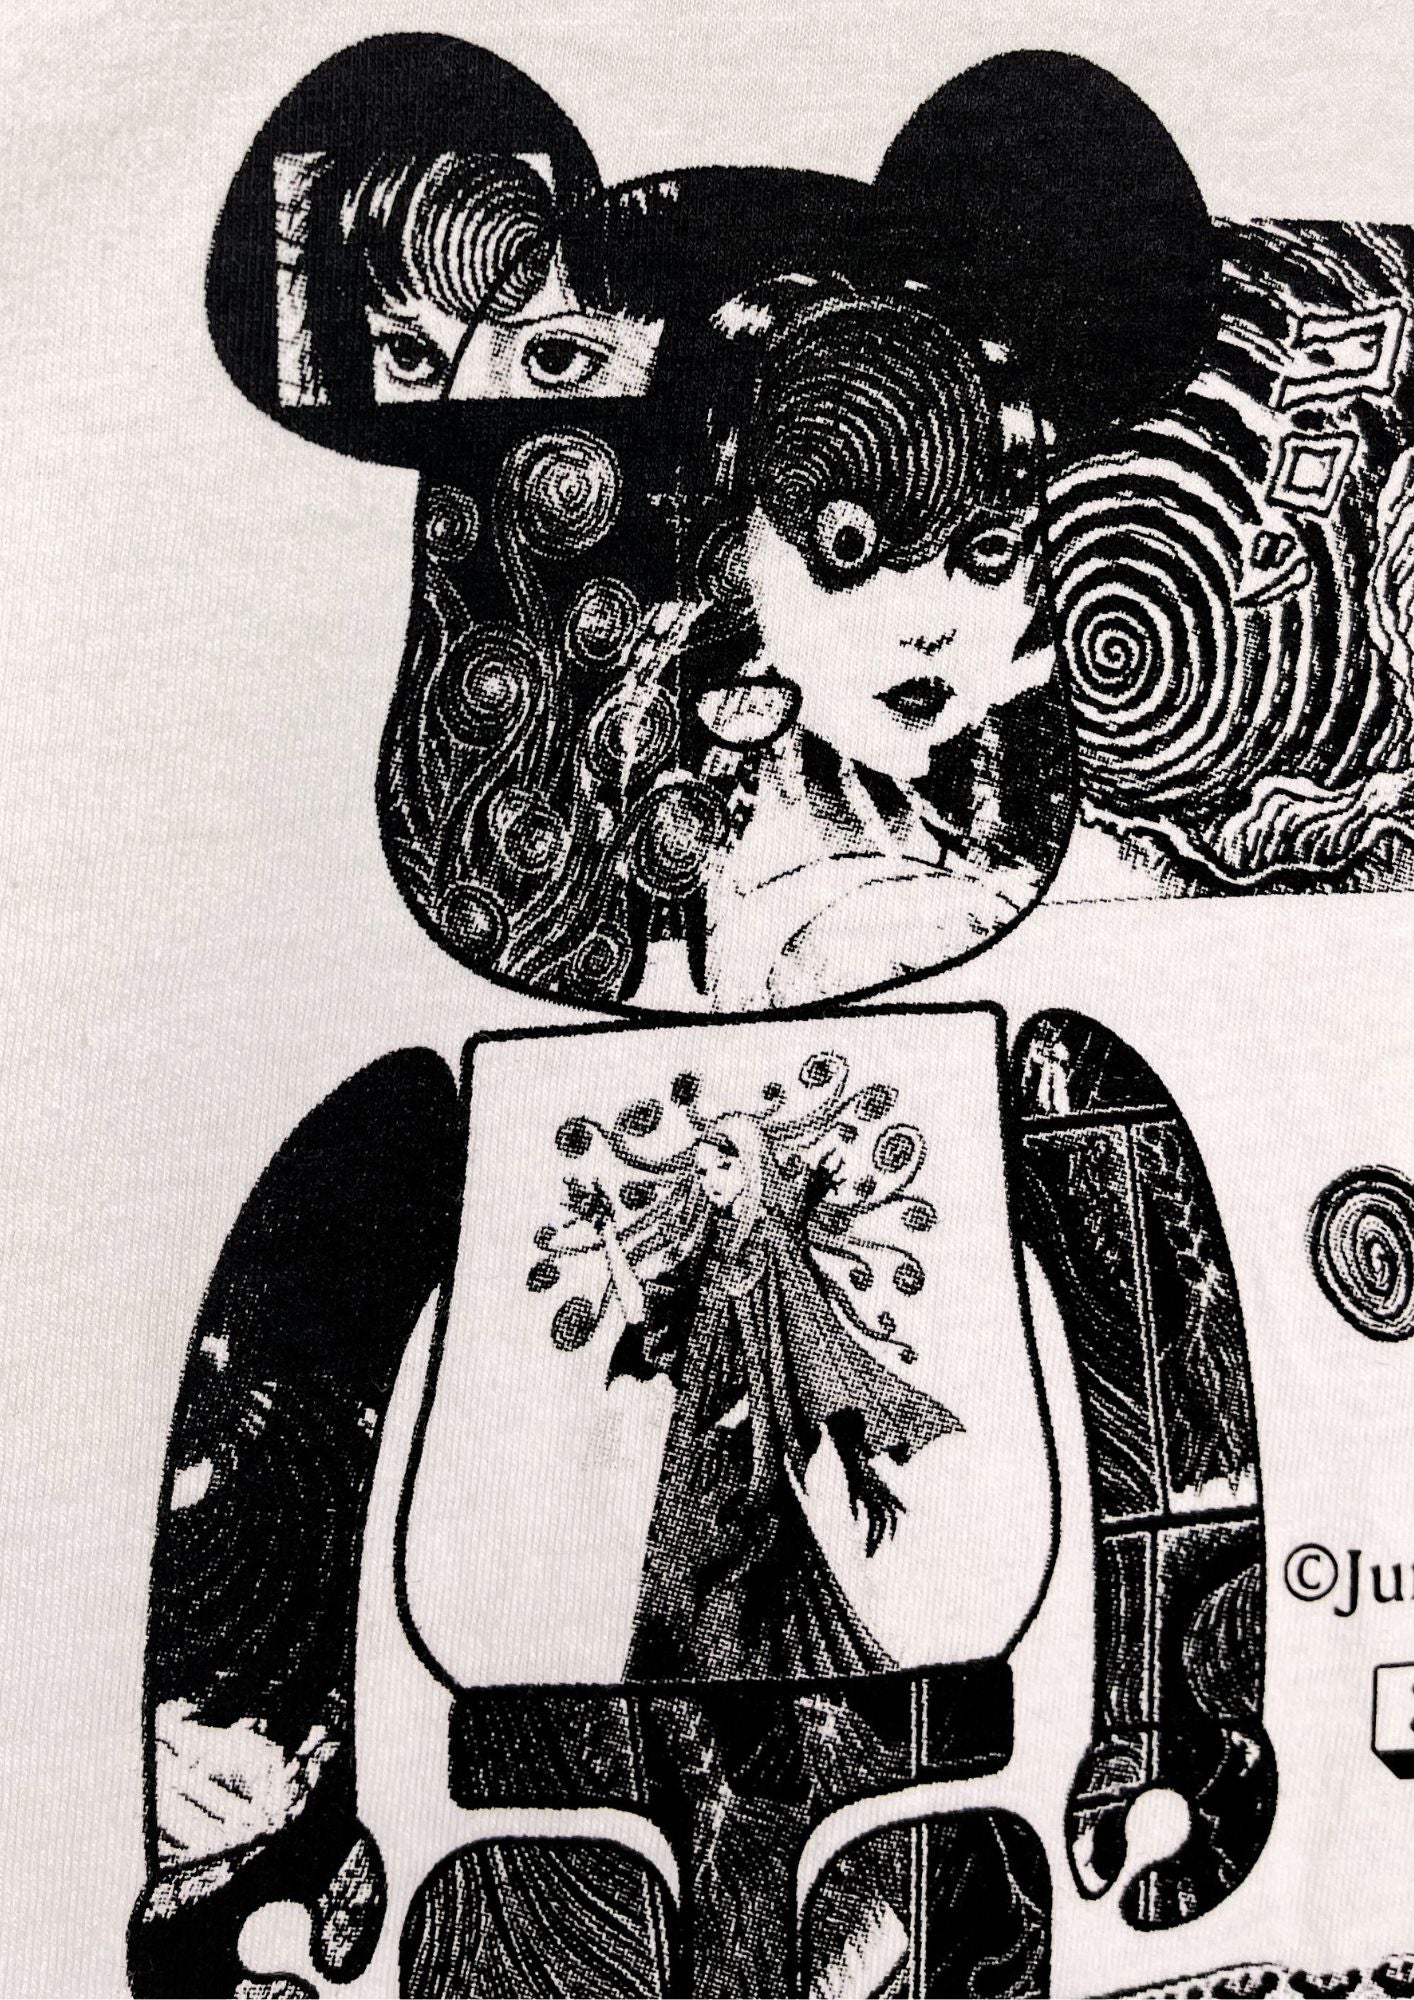 Junji Ito x S'YTE Yohji Yamamoto x BE@RBRICK Uzumaki T-shirt